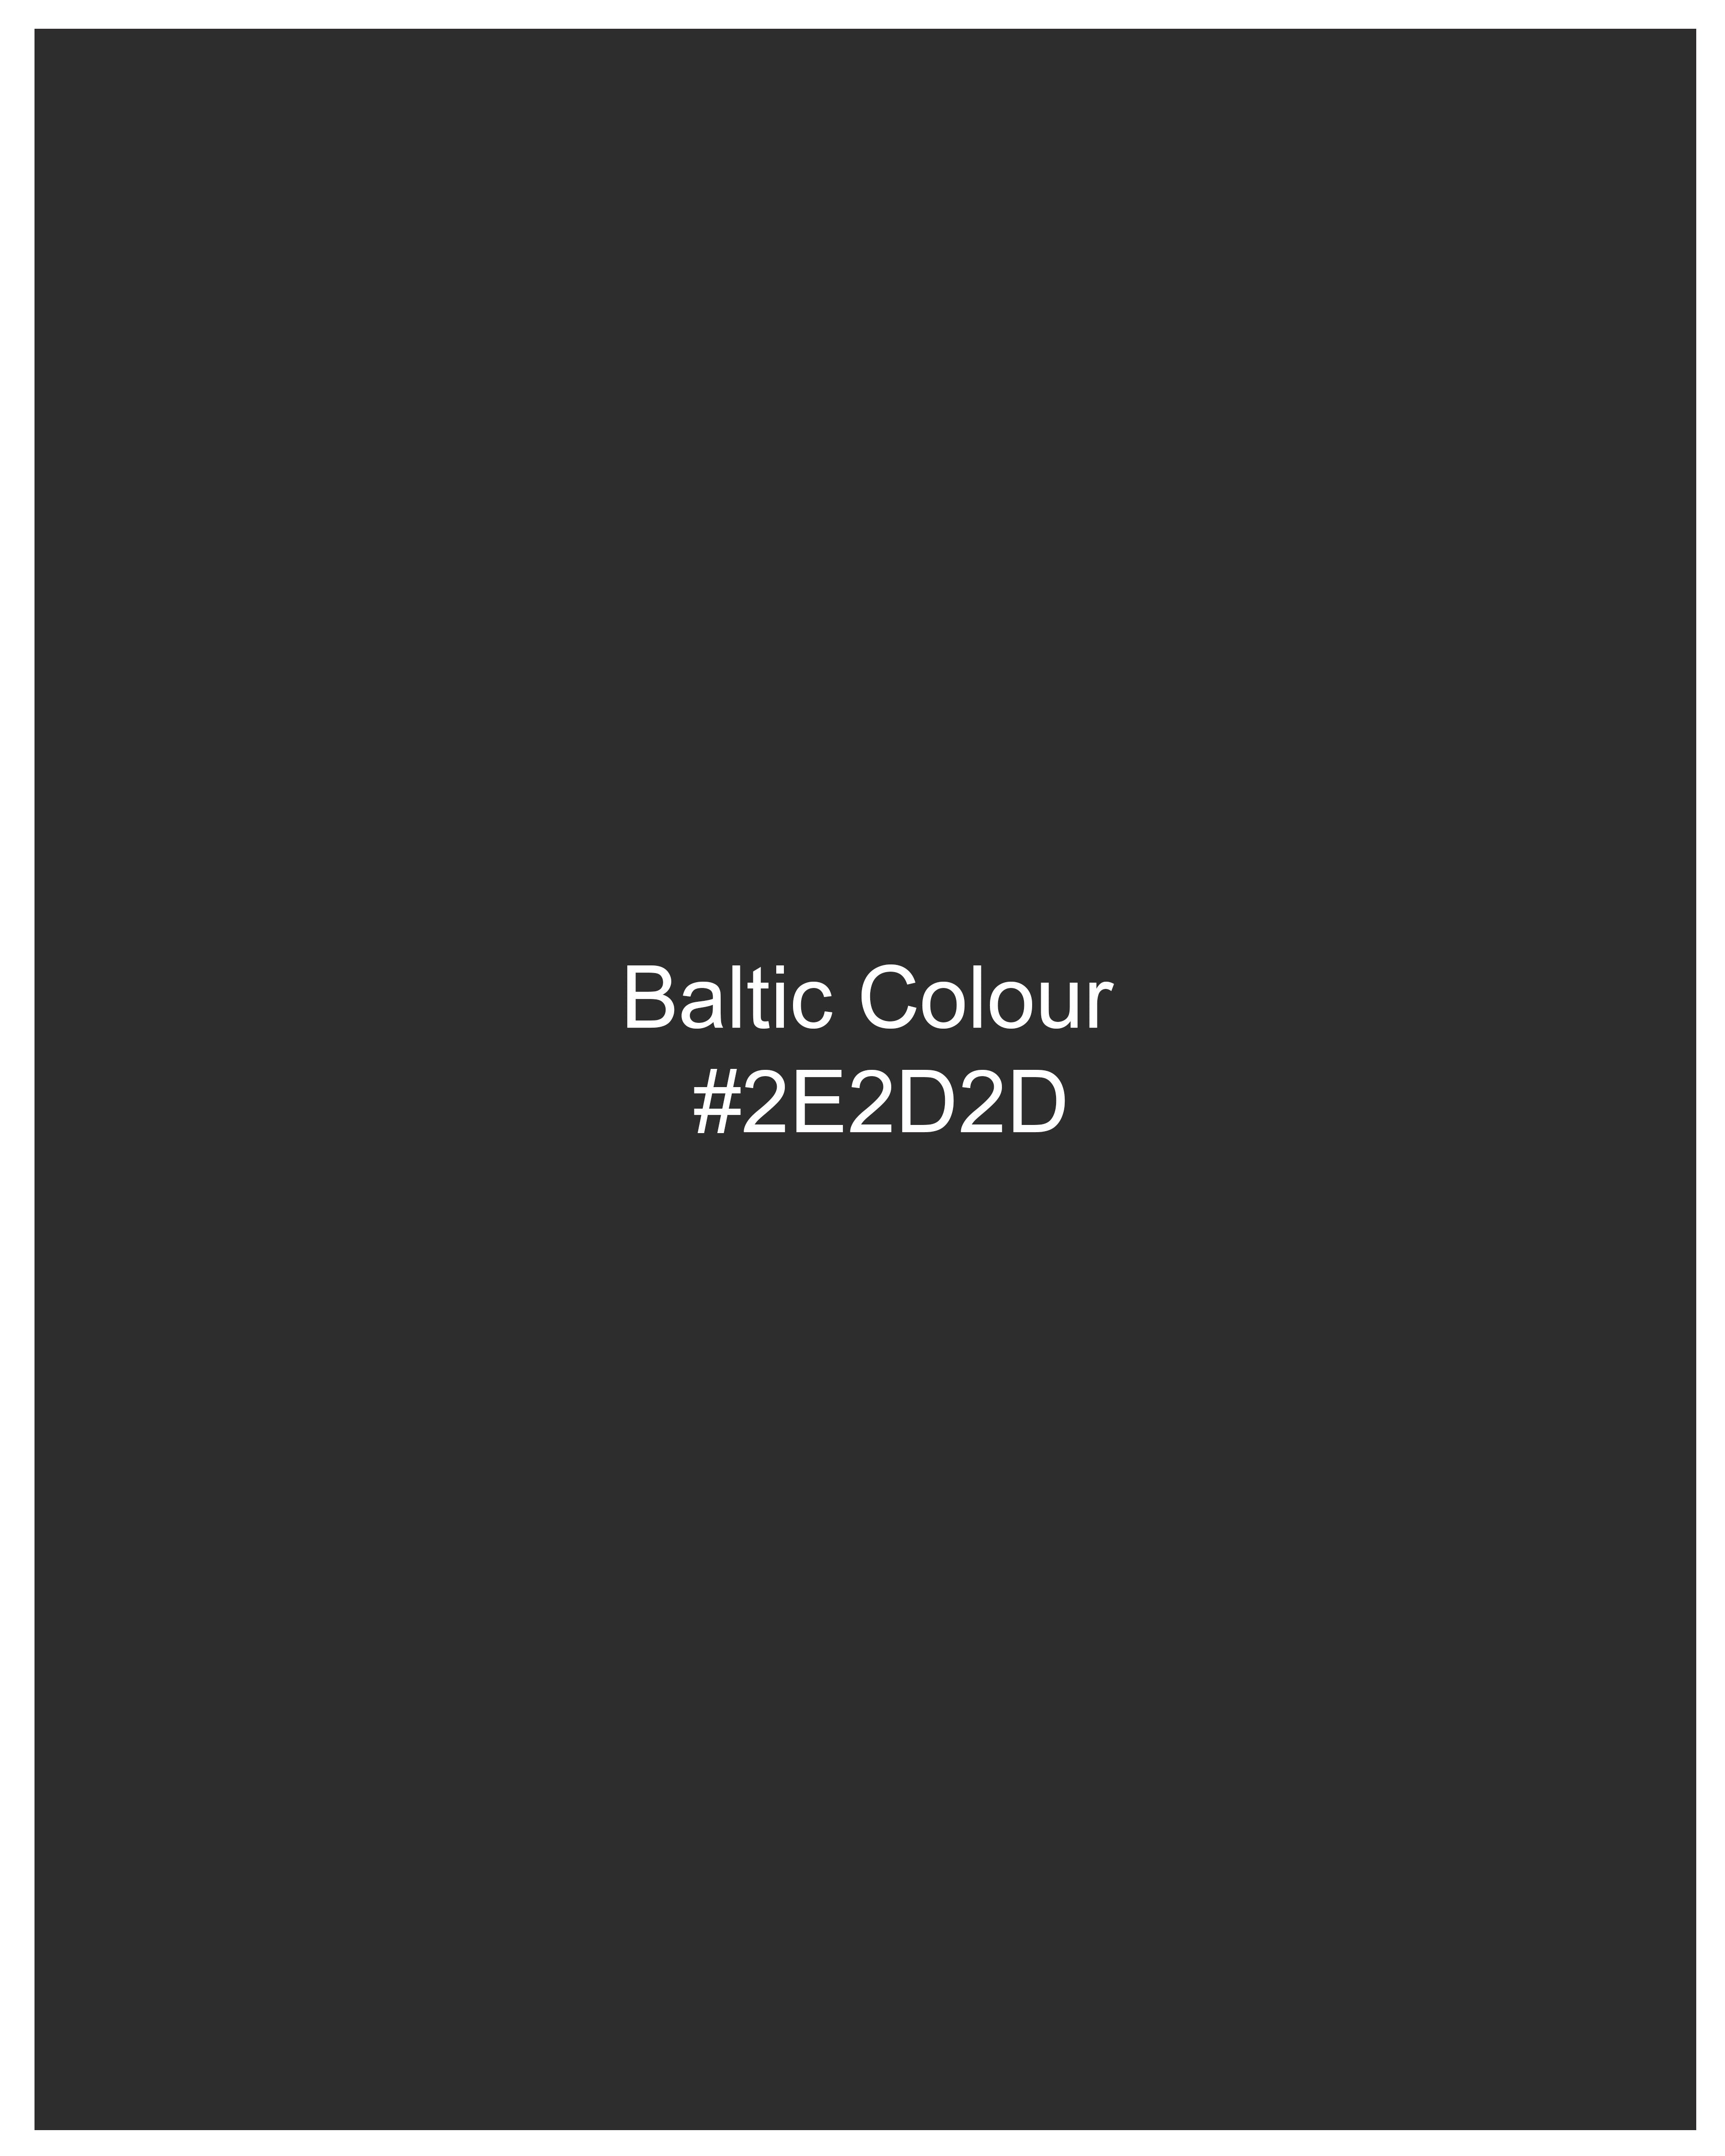 Baltic Black Windowpane Single Breasted Blazer BL2311-SB-36, BL2311-SB-38, BL2311-SB-40, BL2311-SB-42, BL2311-SB-44, BL2311-SB-46, BL2311-SB-48, BL2311-SB-50, BL2311-SB-52, BL2311-SB-54, BL2311-SB-56, BL2311-SB-58, BL2311-SB-60